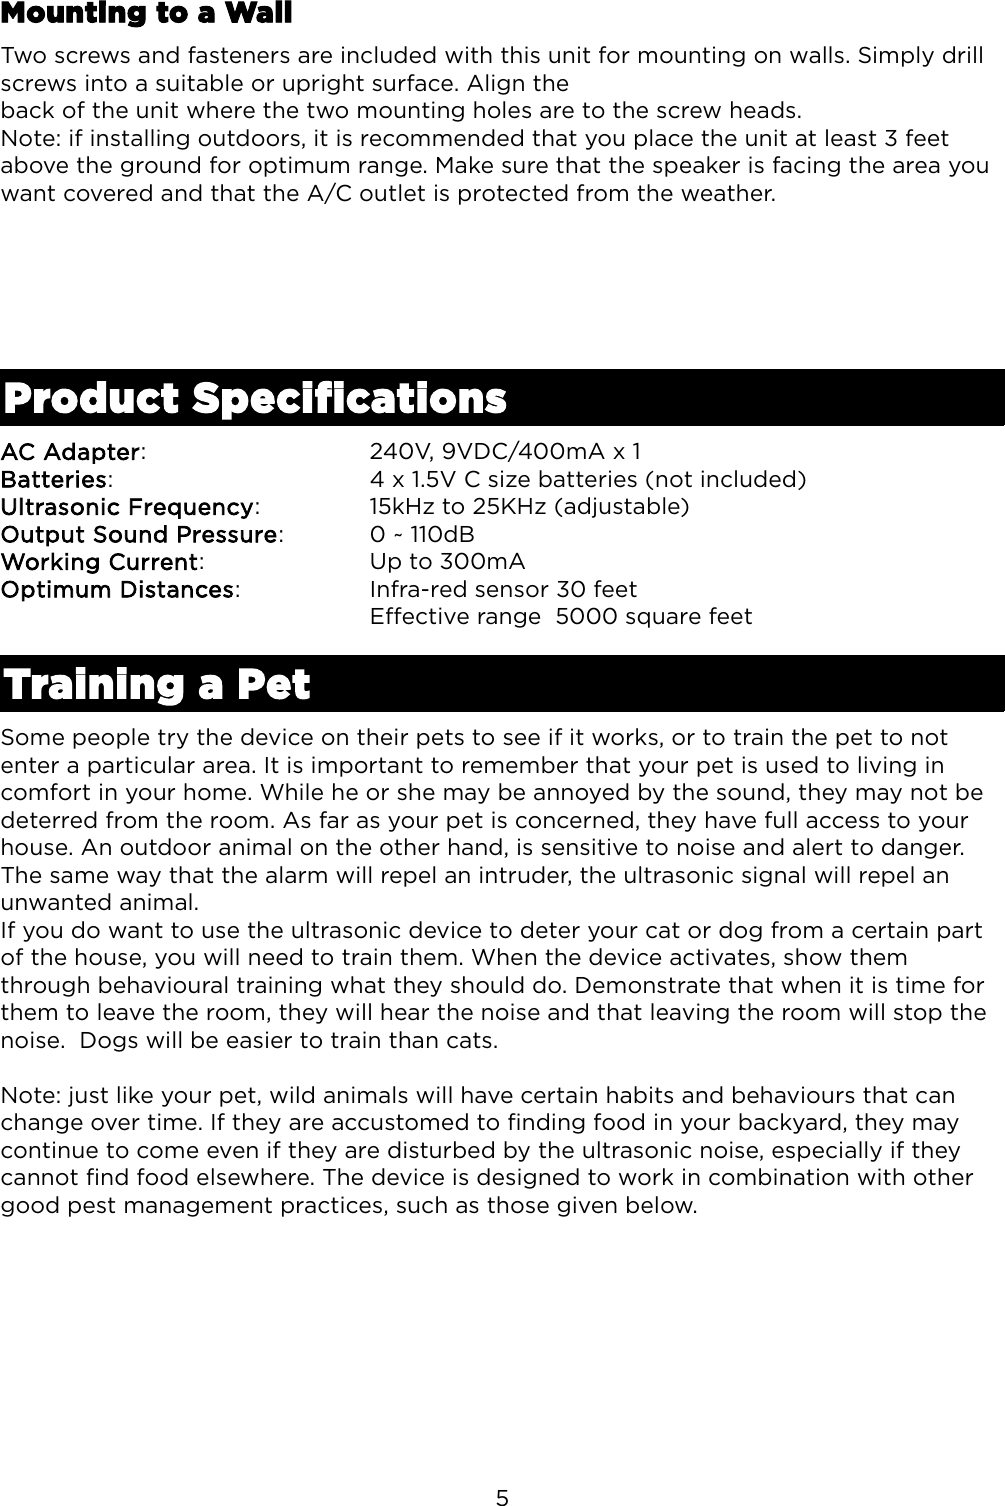 Page 6 of 7 - PTPSMREP1PA Pestill Possum Repeller User Manual  PTPSMREP1PA2-QSG